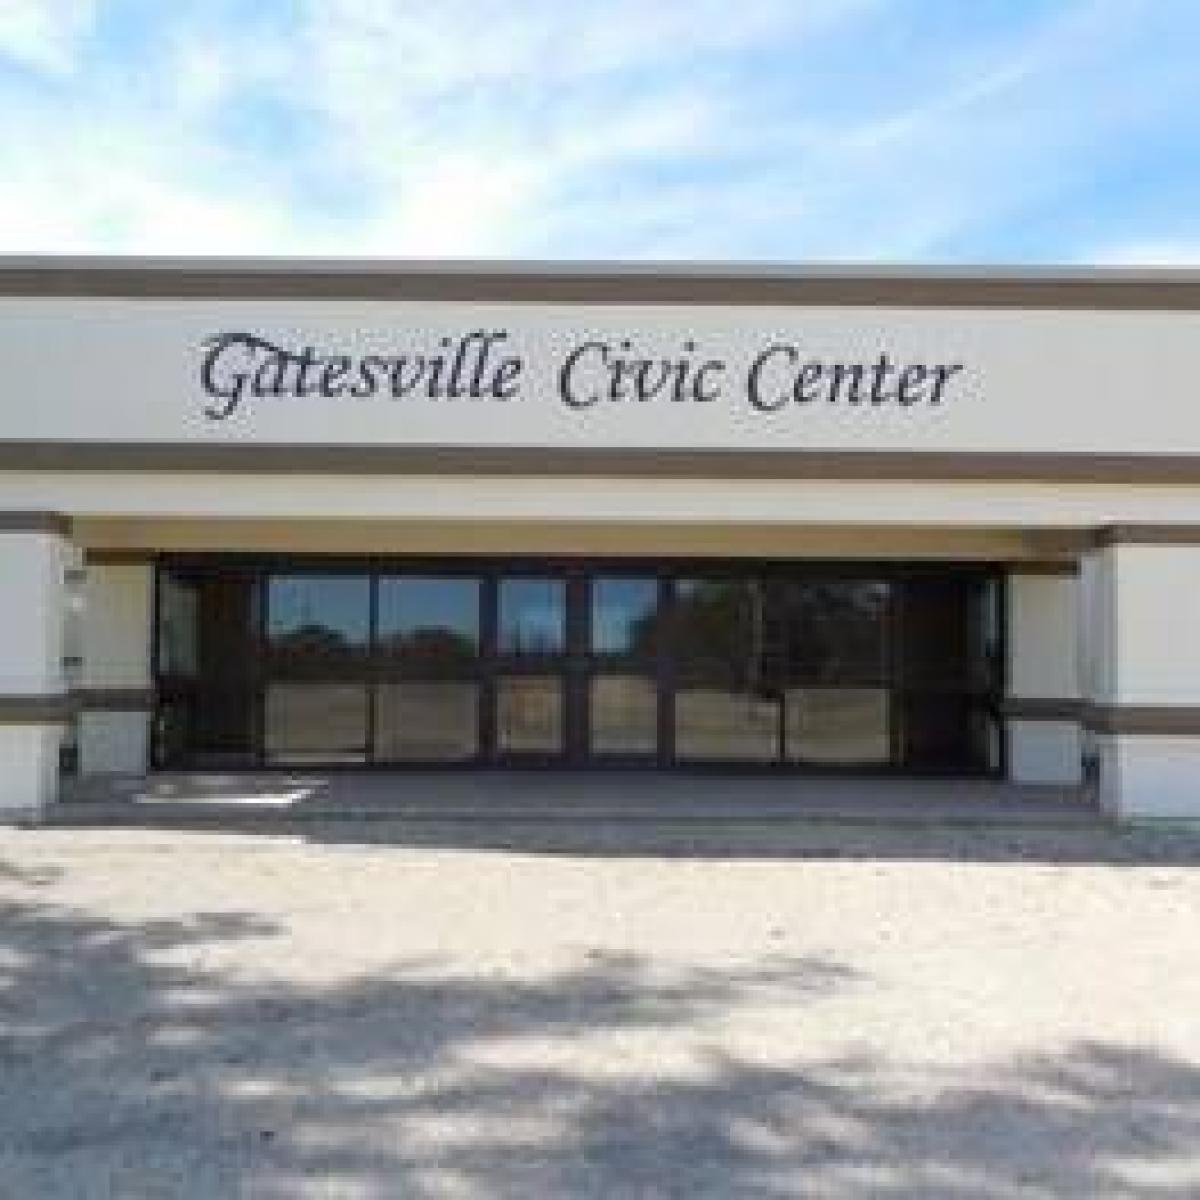 Gatesville Civic Center